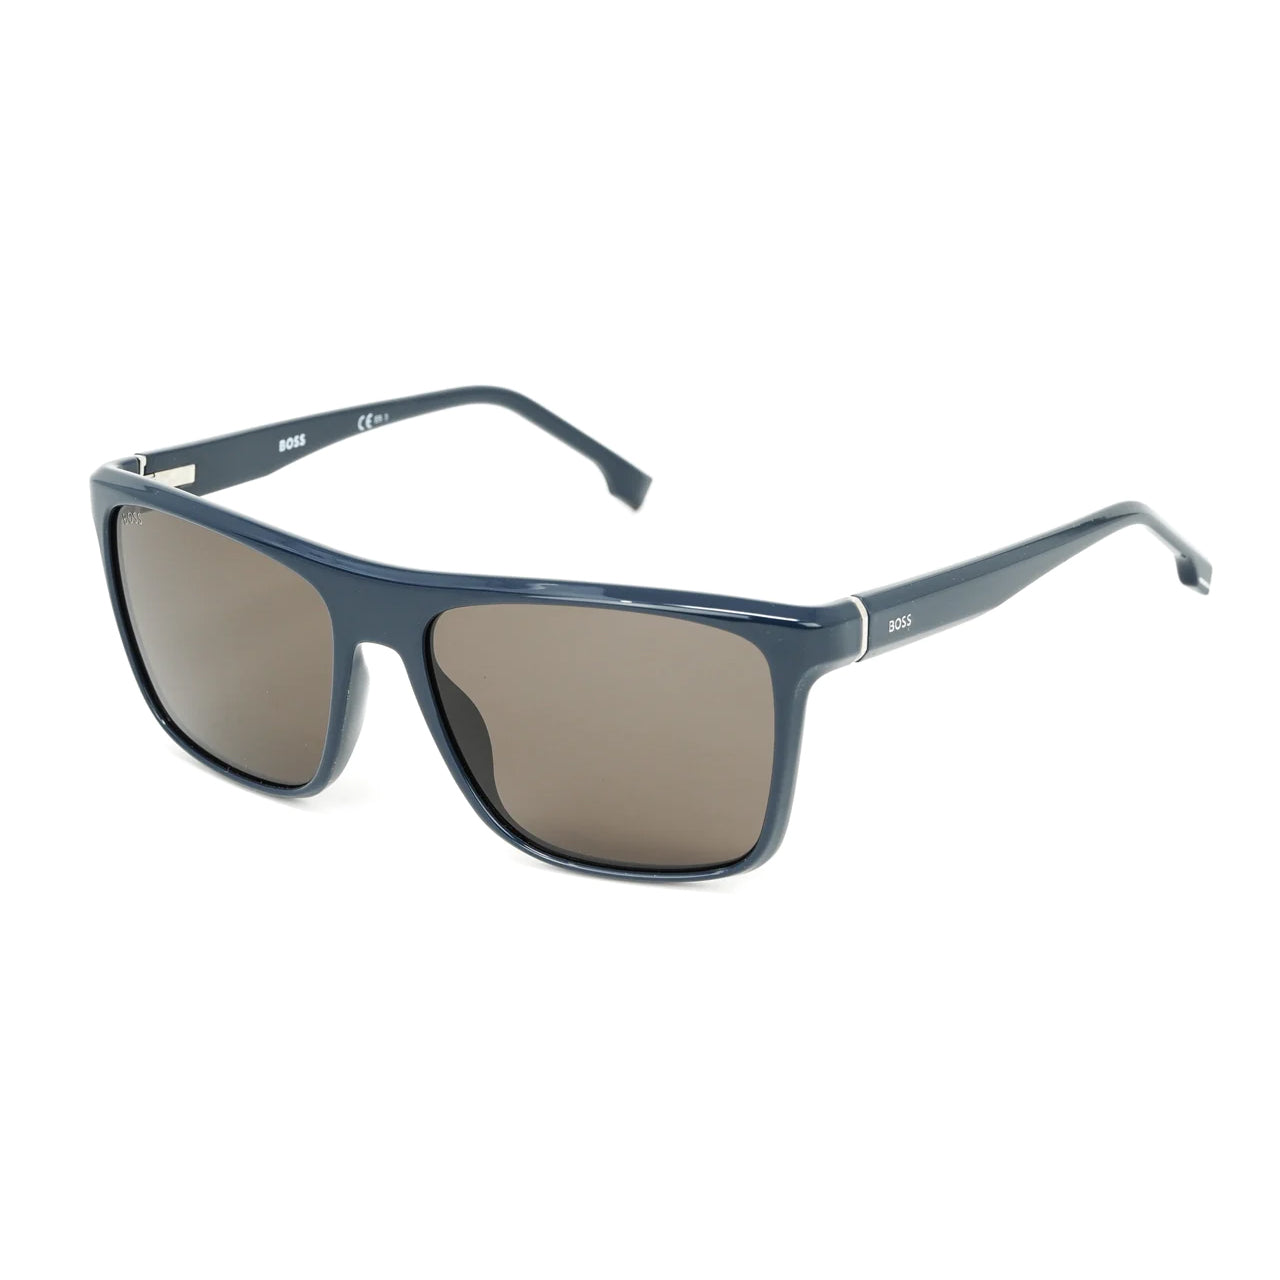 Boss by BOSS Men's Sunglasses Classic Rectangle Blue/Grey 1375/S PJP